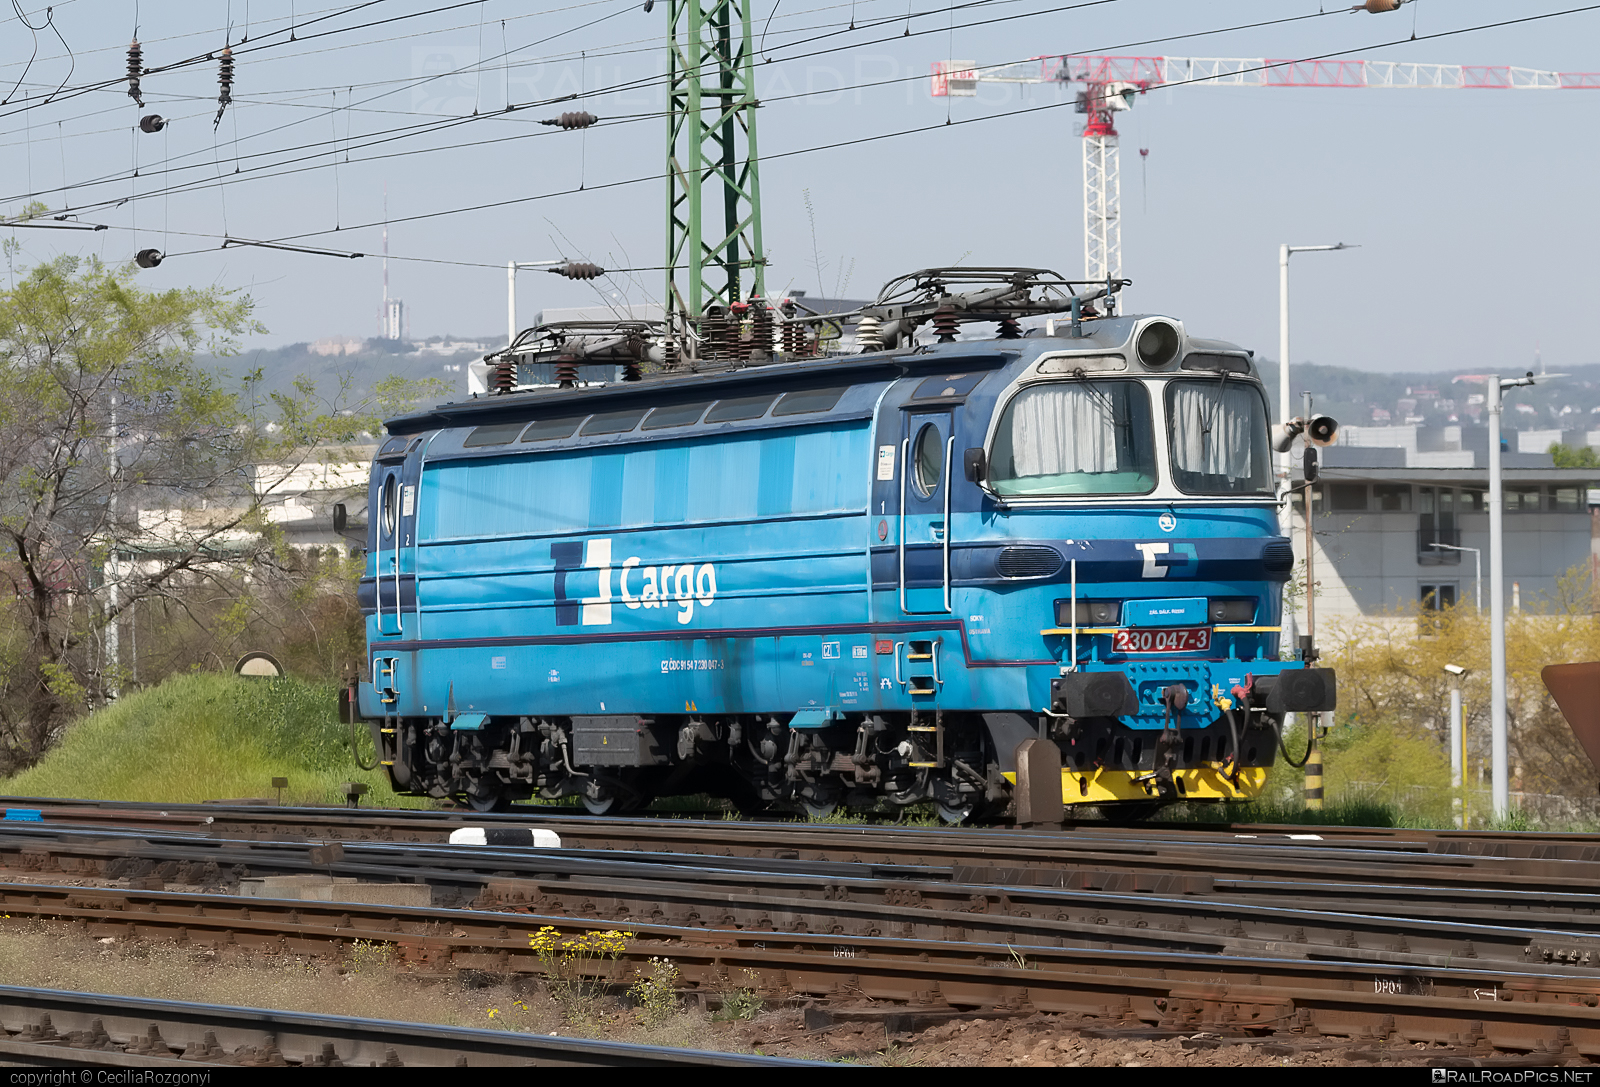 Škoda 47E - 230 047-3 operated by ČD Cargo, a.s. #cdcargo #laminatka #locomotive240 #skoda #skoda47e